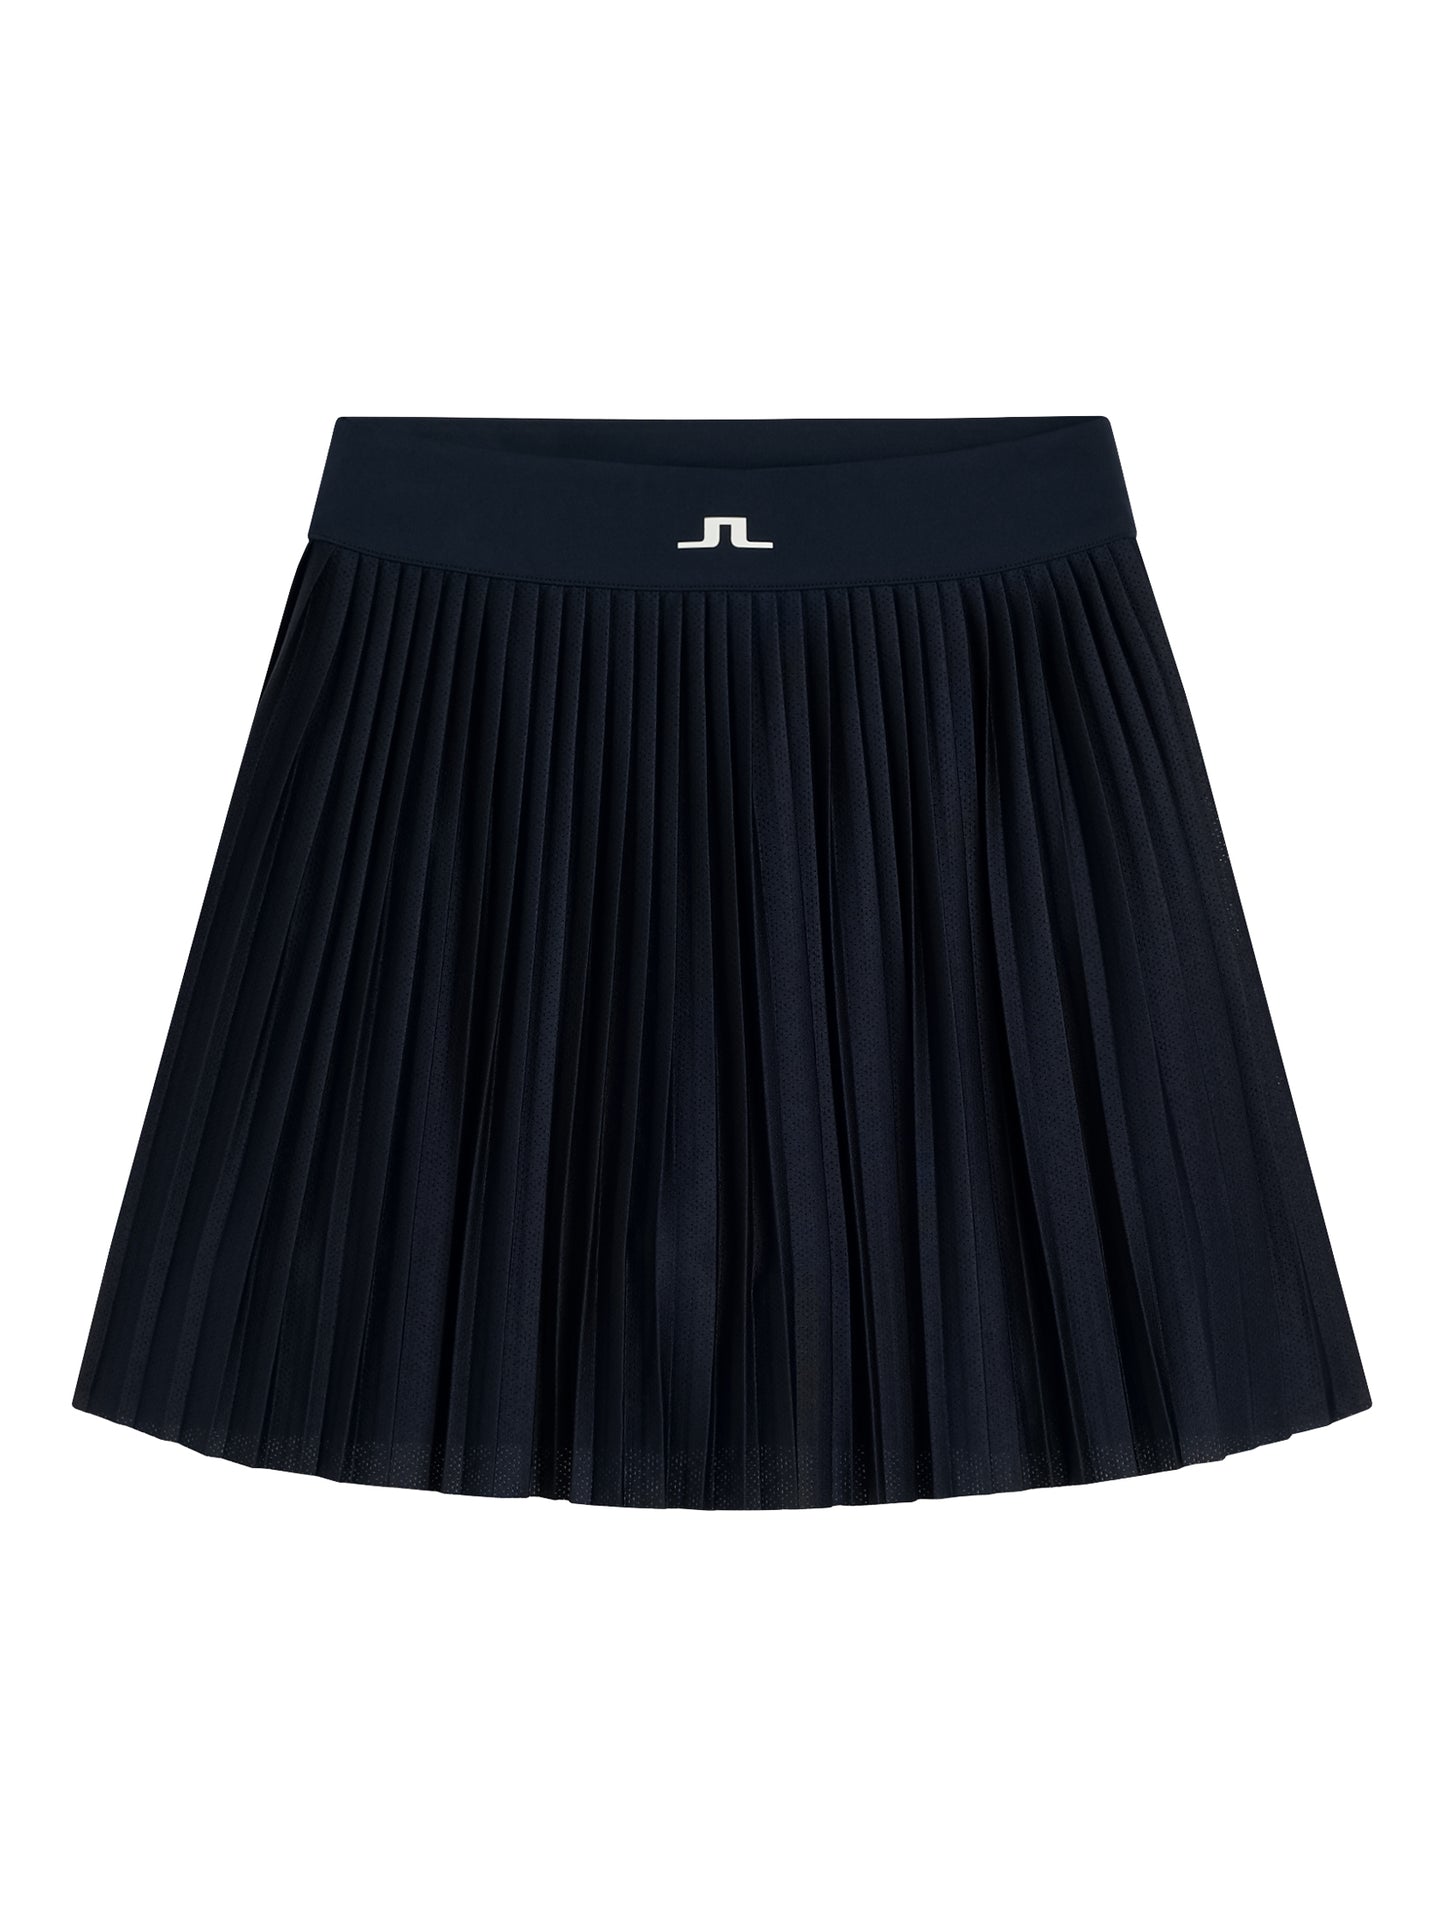 Binx Skirt / JL Navy